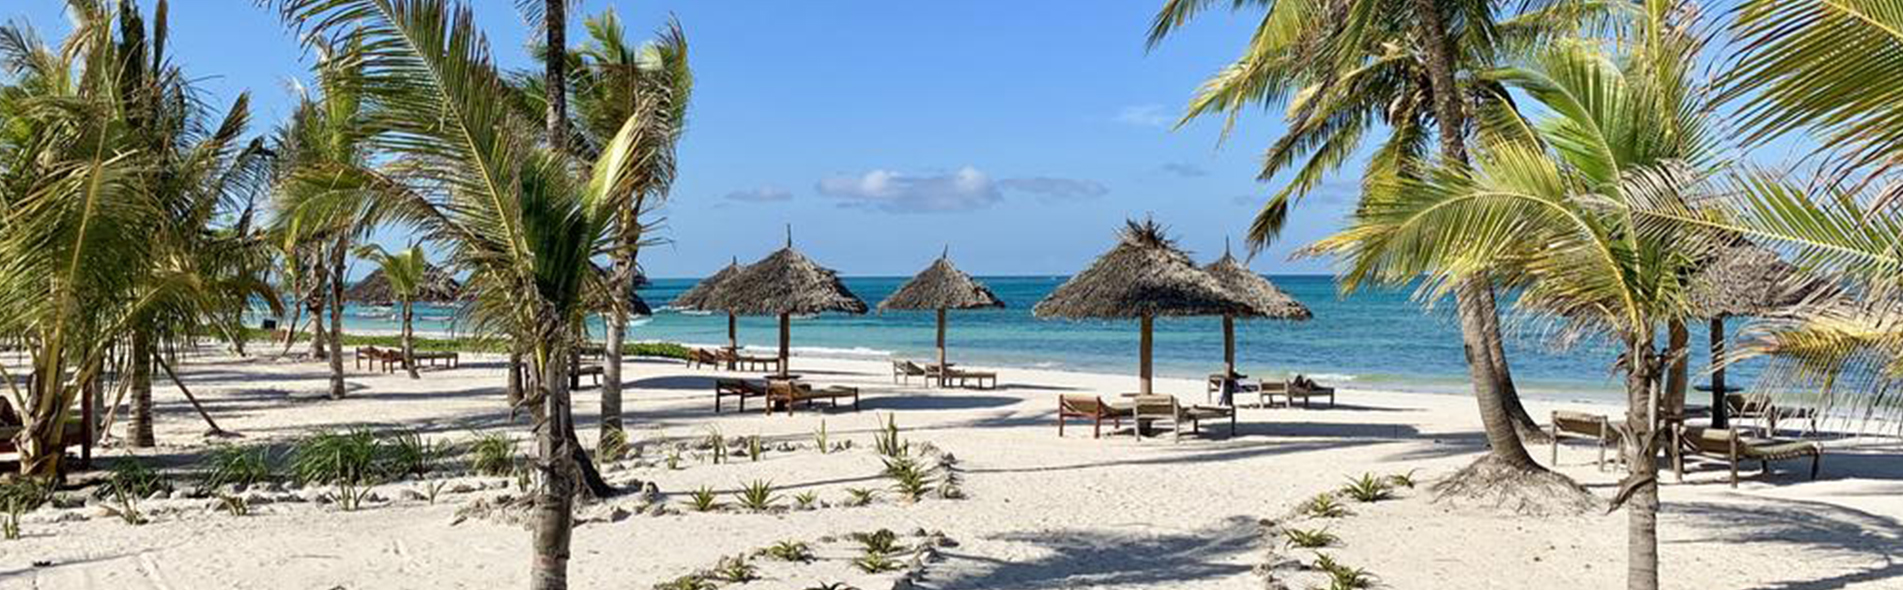 The Sands Beach Resort, Tanzania